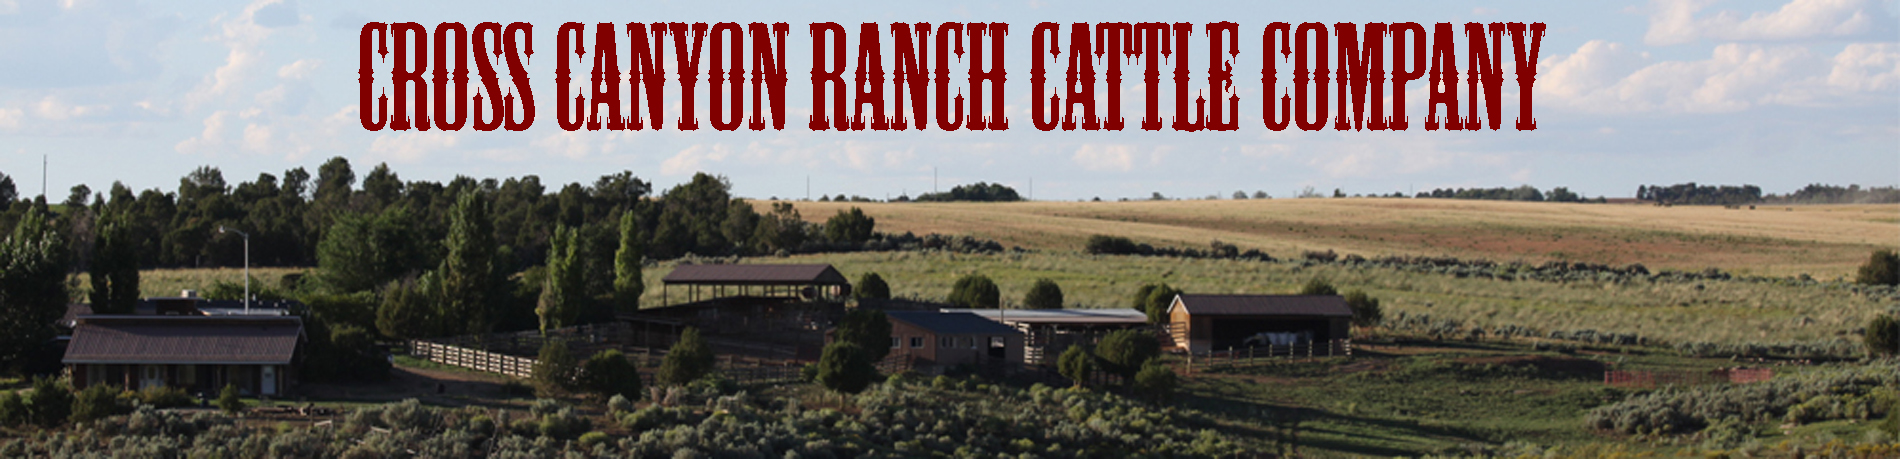 Cross Canyon Ranch